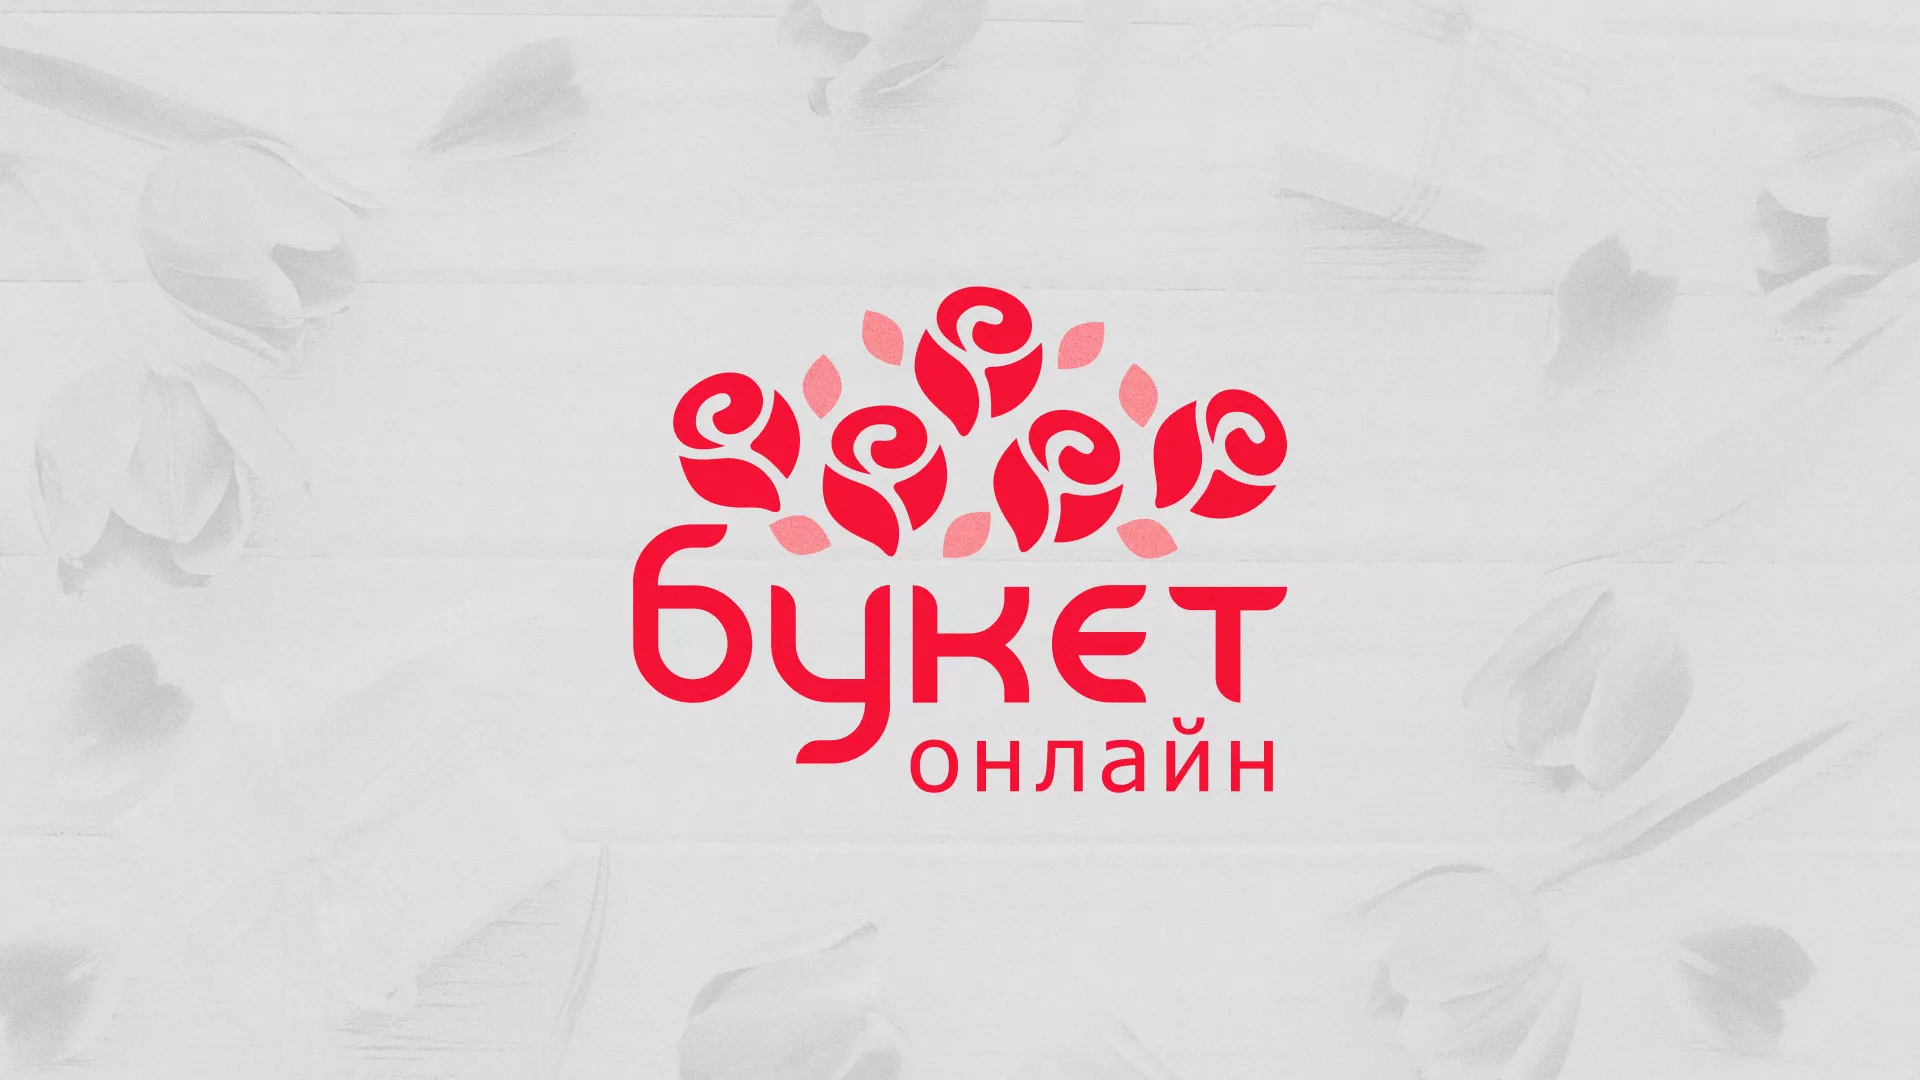 Создание интернет-магазина «Букет-онлайн» по цветам в Тюмени